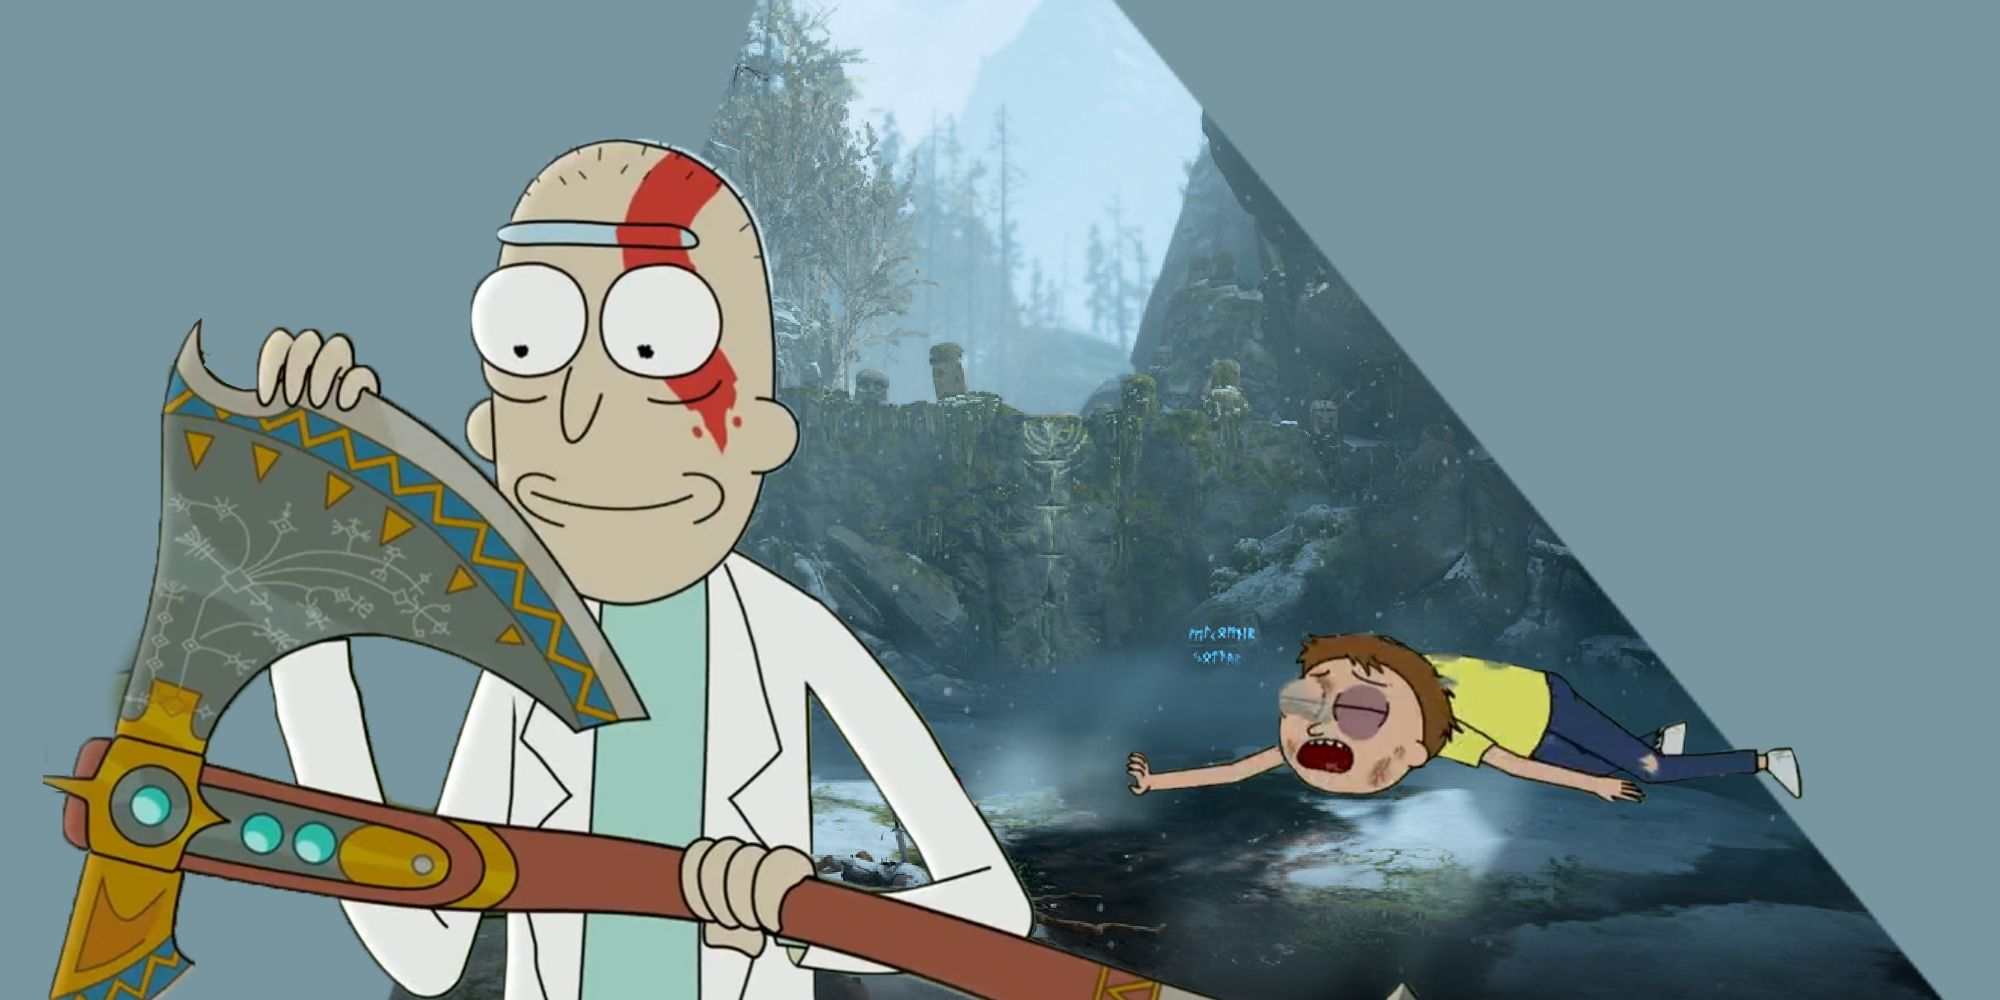 Rick and Morty resembling Kratos and Atreus